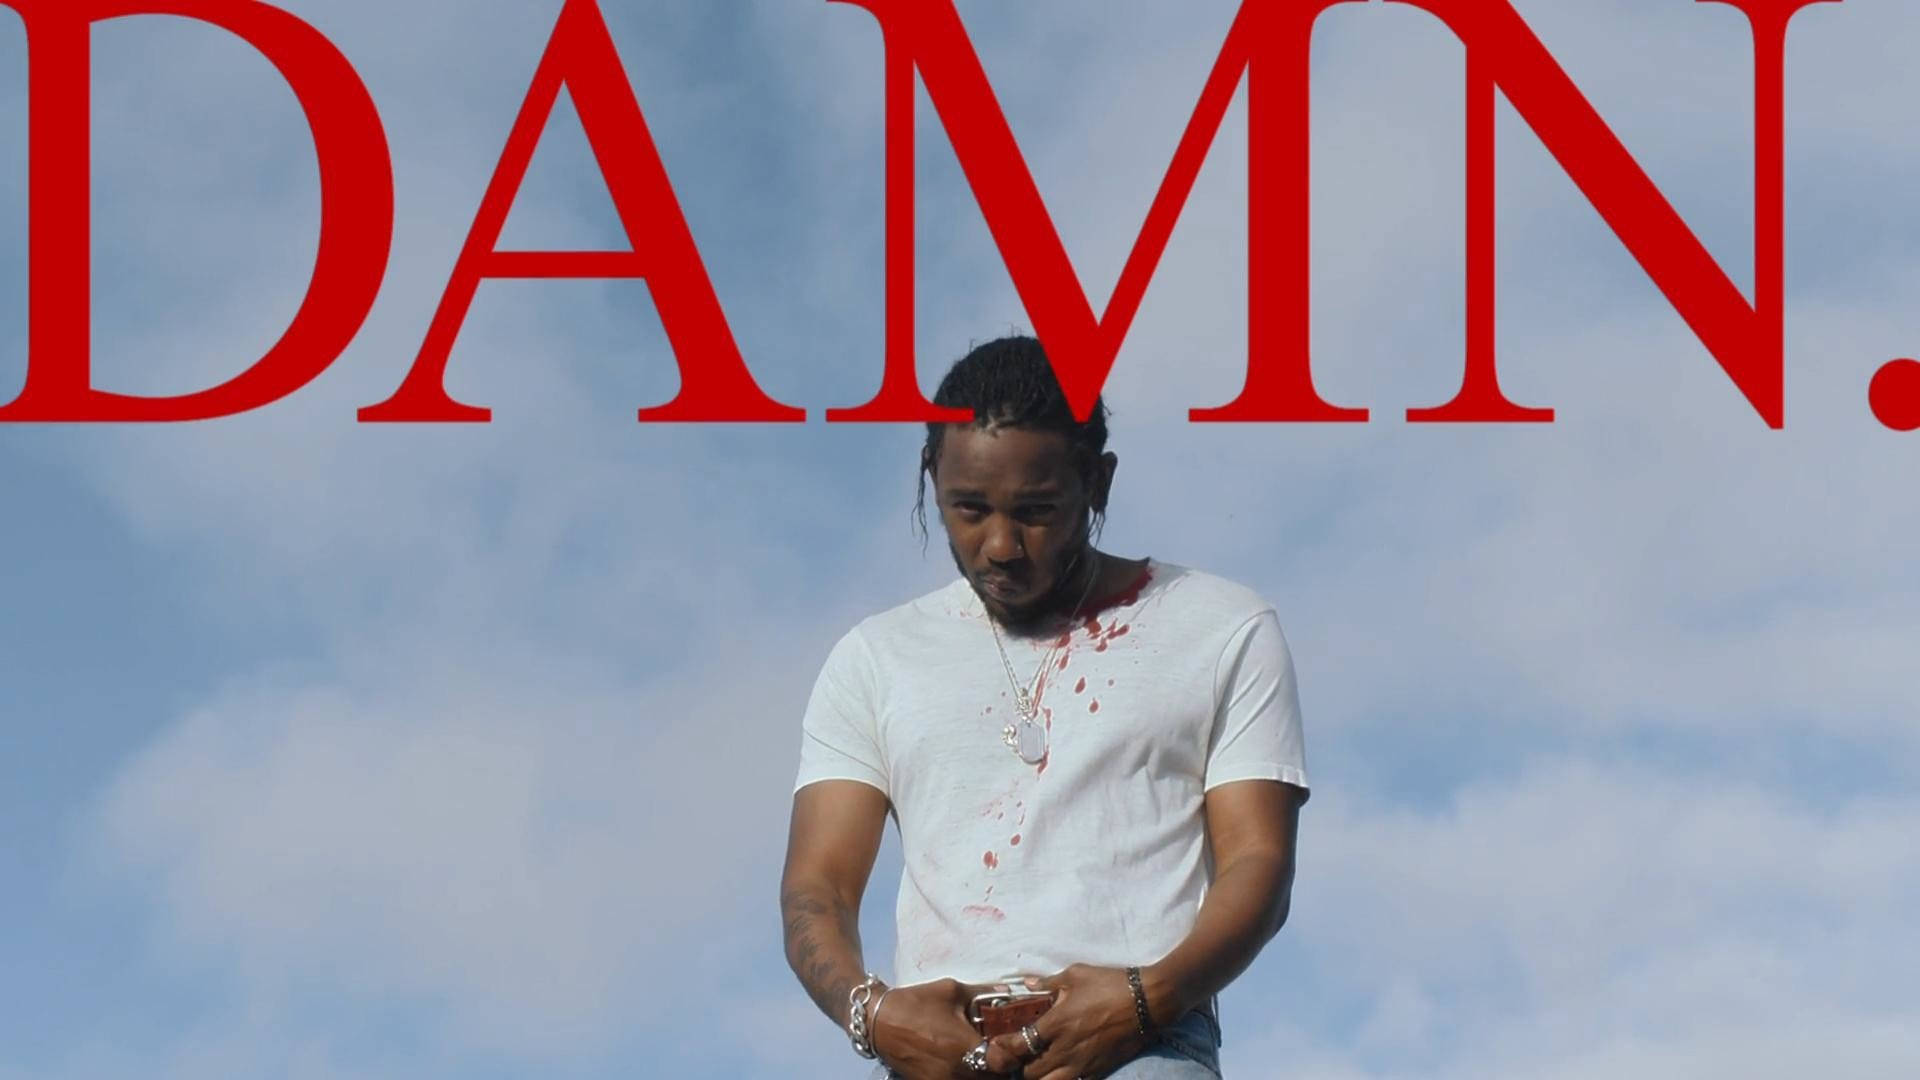 Free Kendrick Lamar Wallpaper Downloads, Kendrick Lamar Wallpaper for FREE